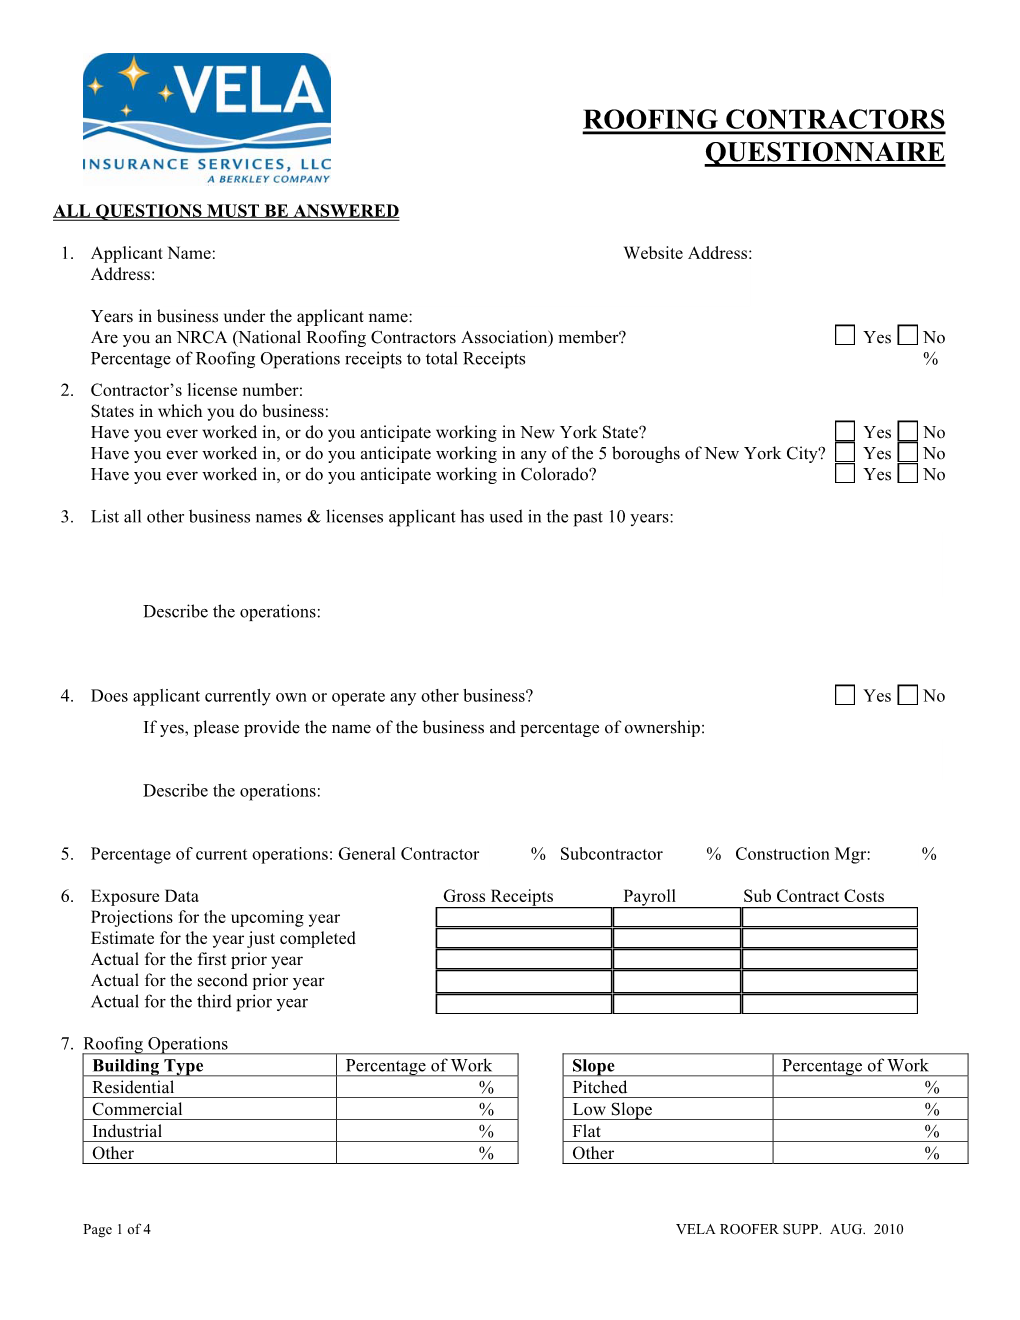 Roofing Contractors Questionnaire